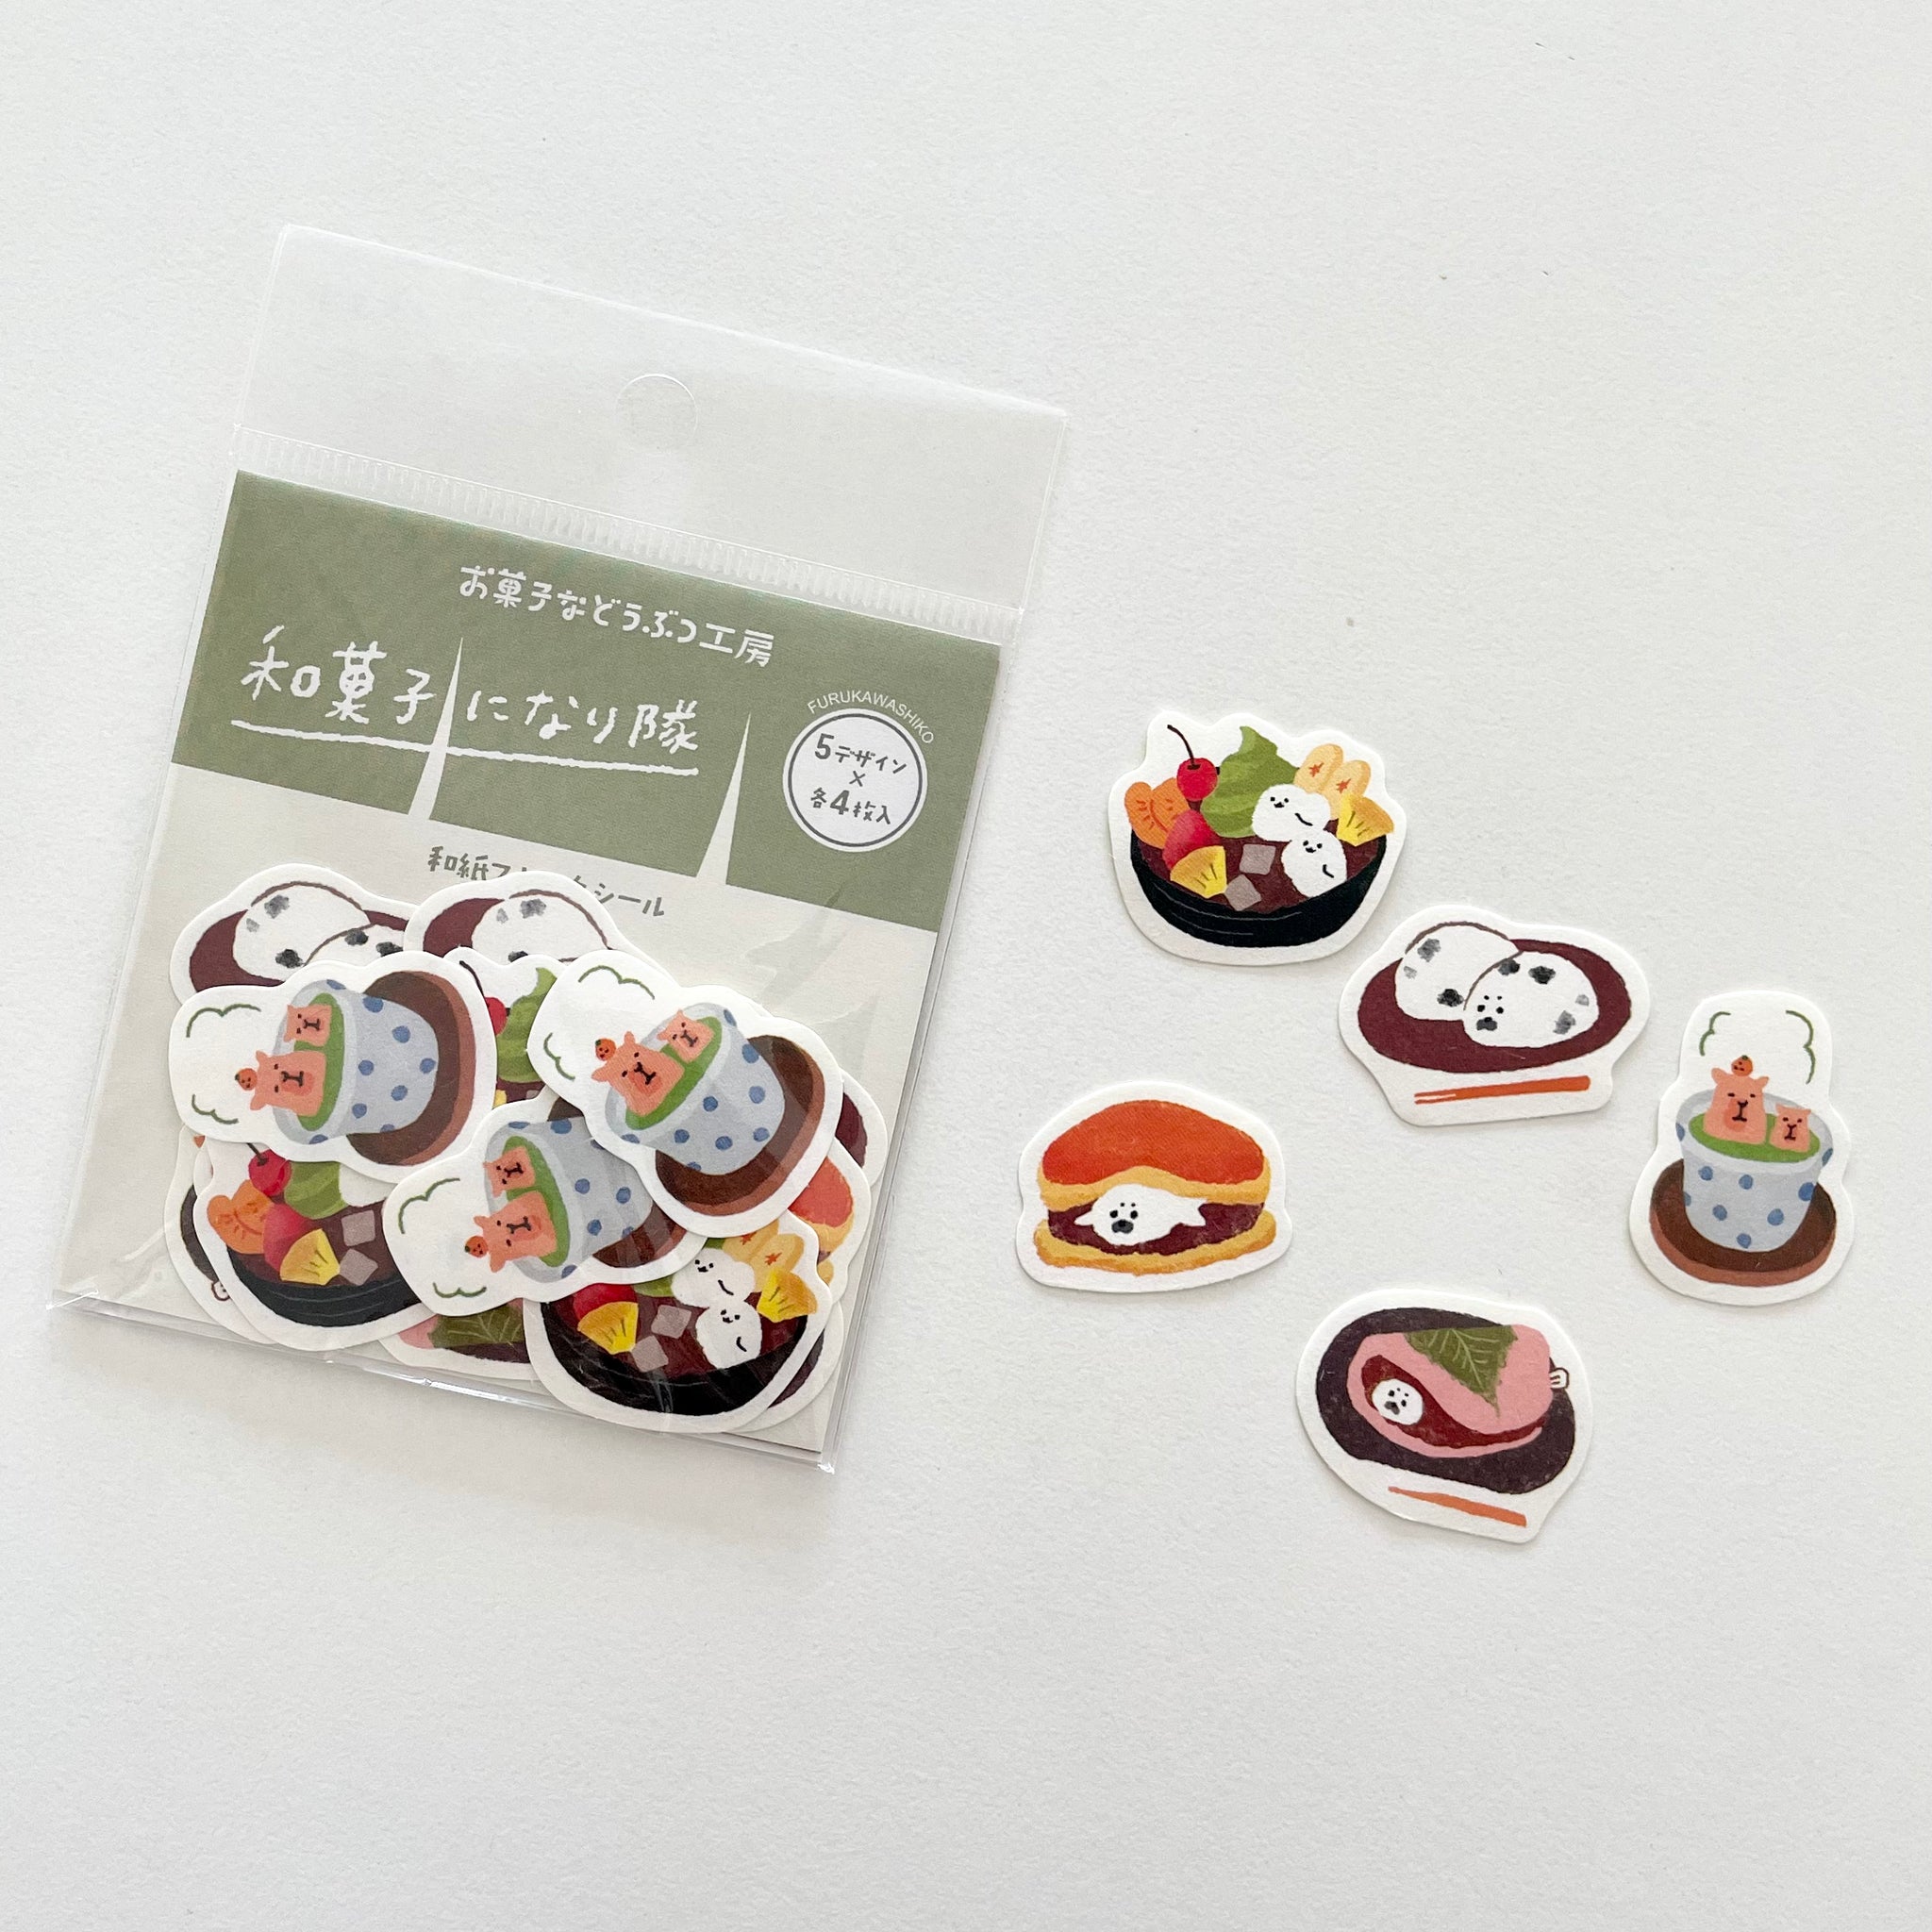 Furukawashiko Japanese Paper Sticker - Kawaii Dessert